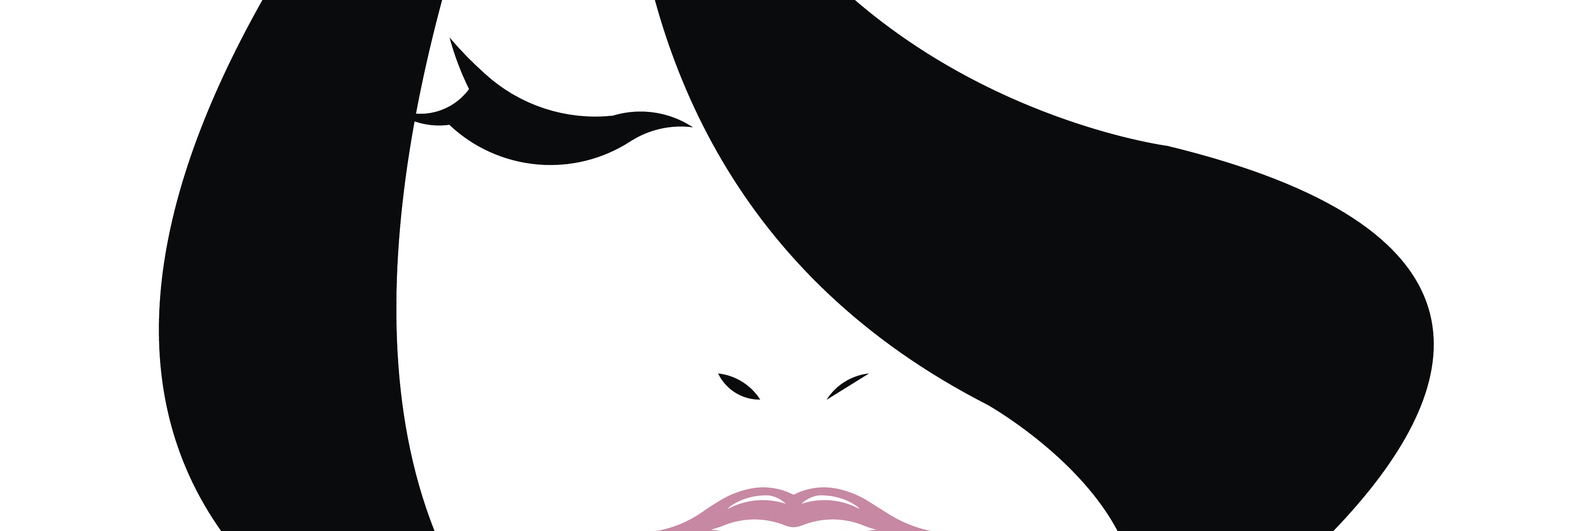 short hair style icon, logo women face on white background, vector